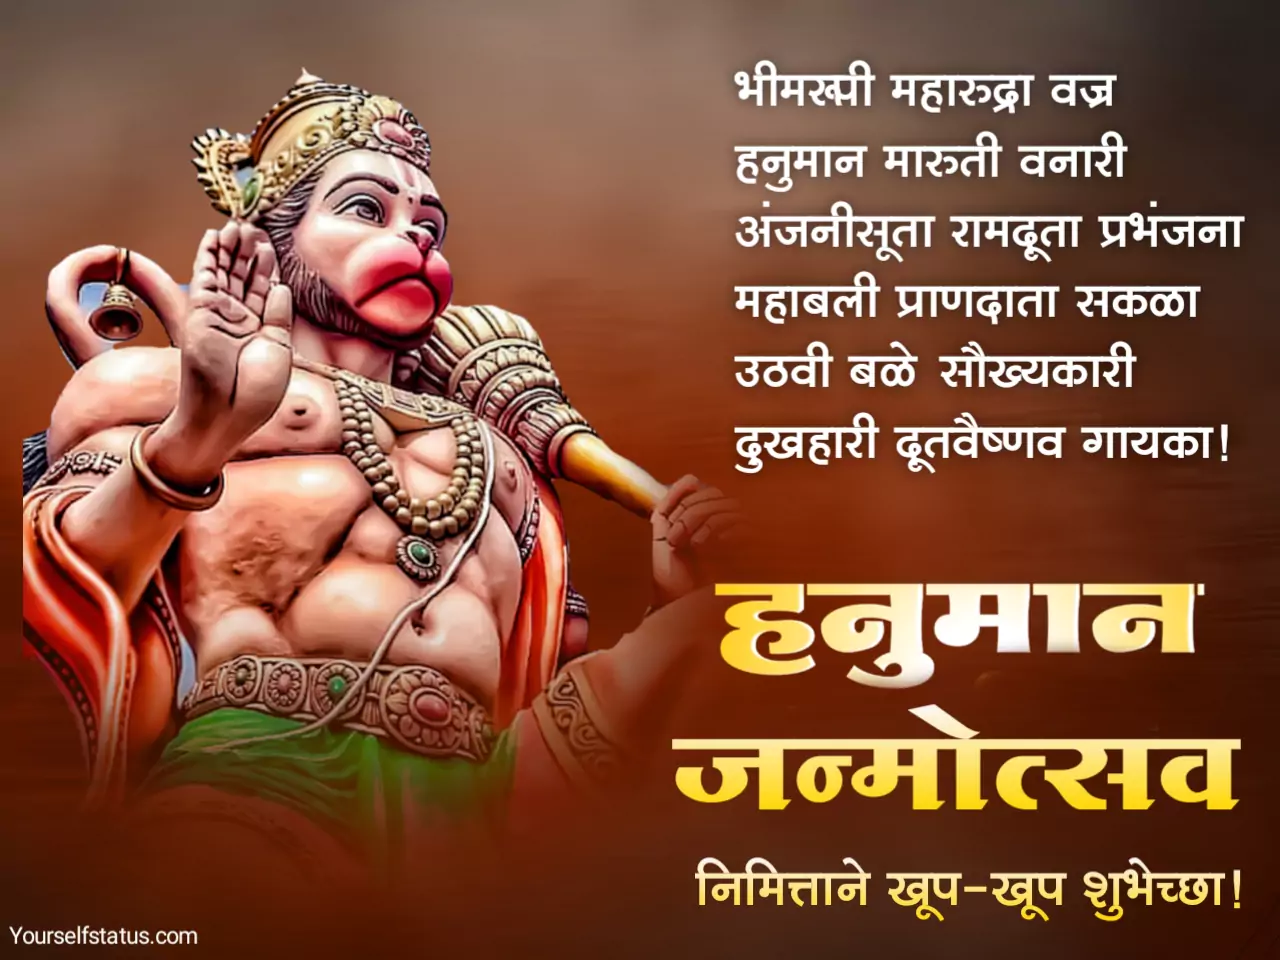 Hanuman jayanti status in marathi